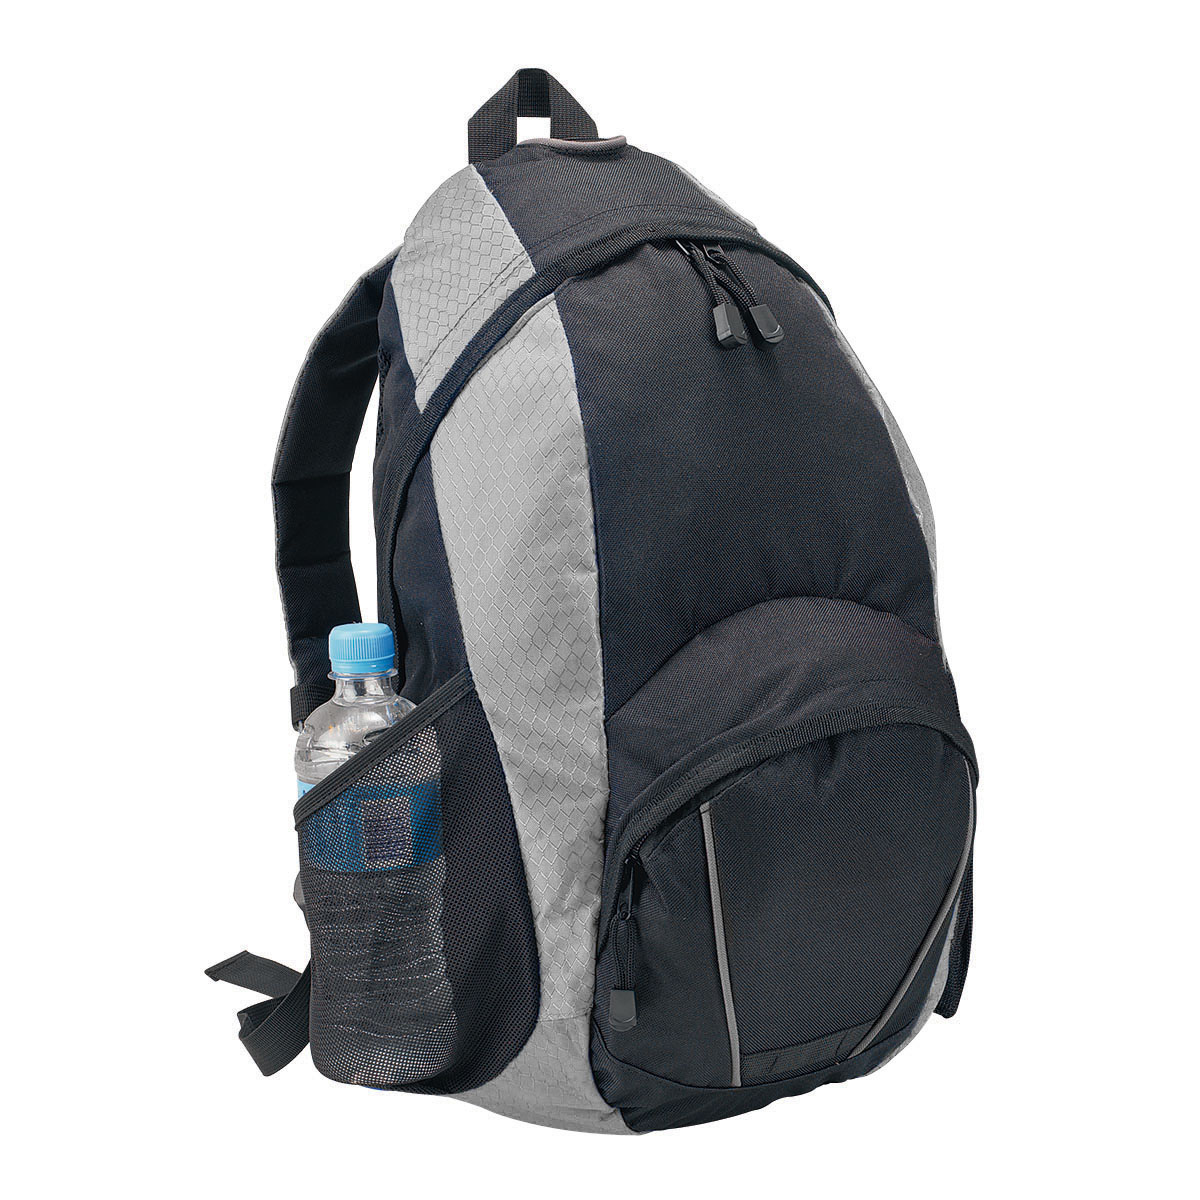 Polaris Backpack - Image Group